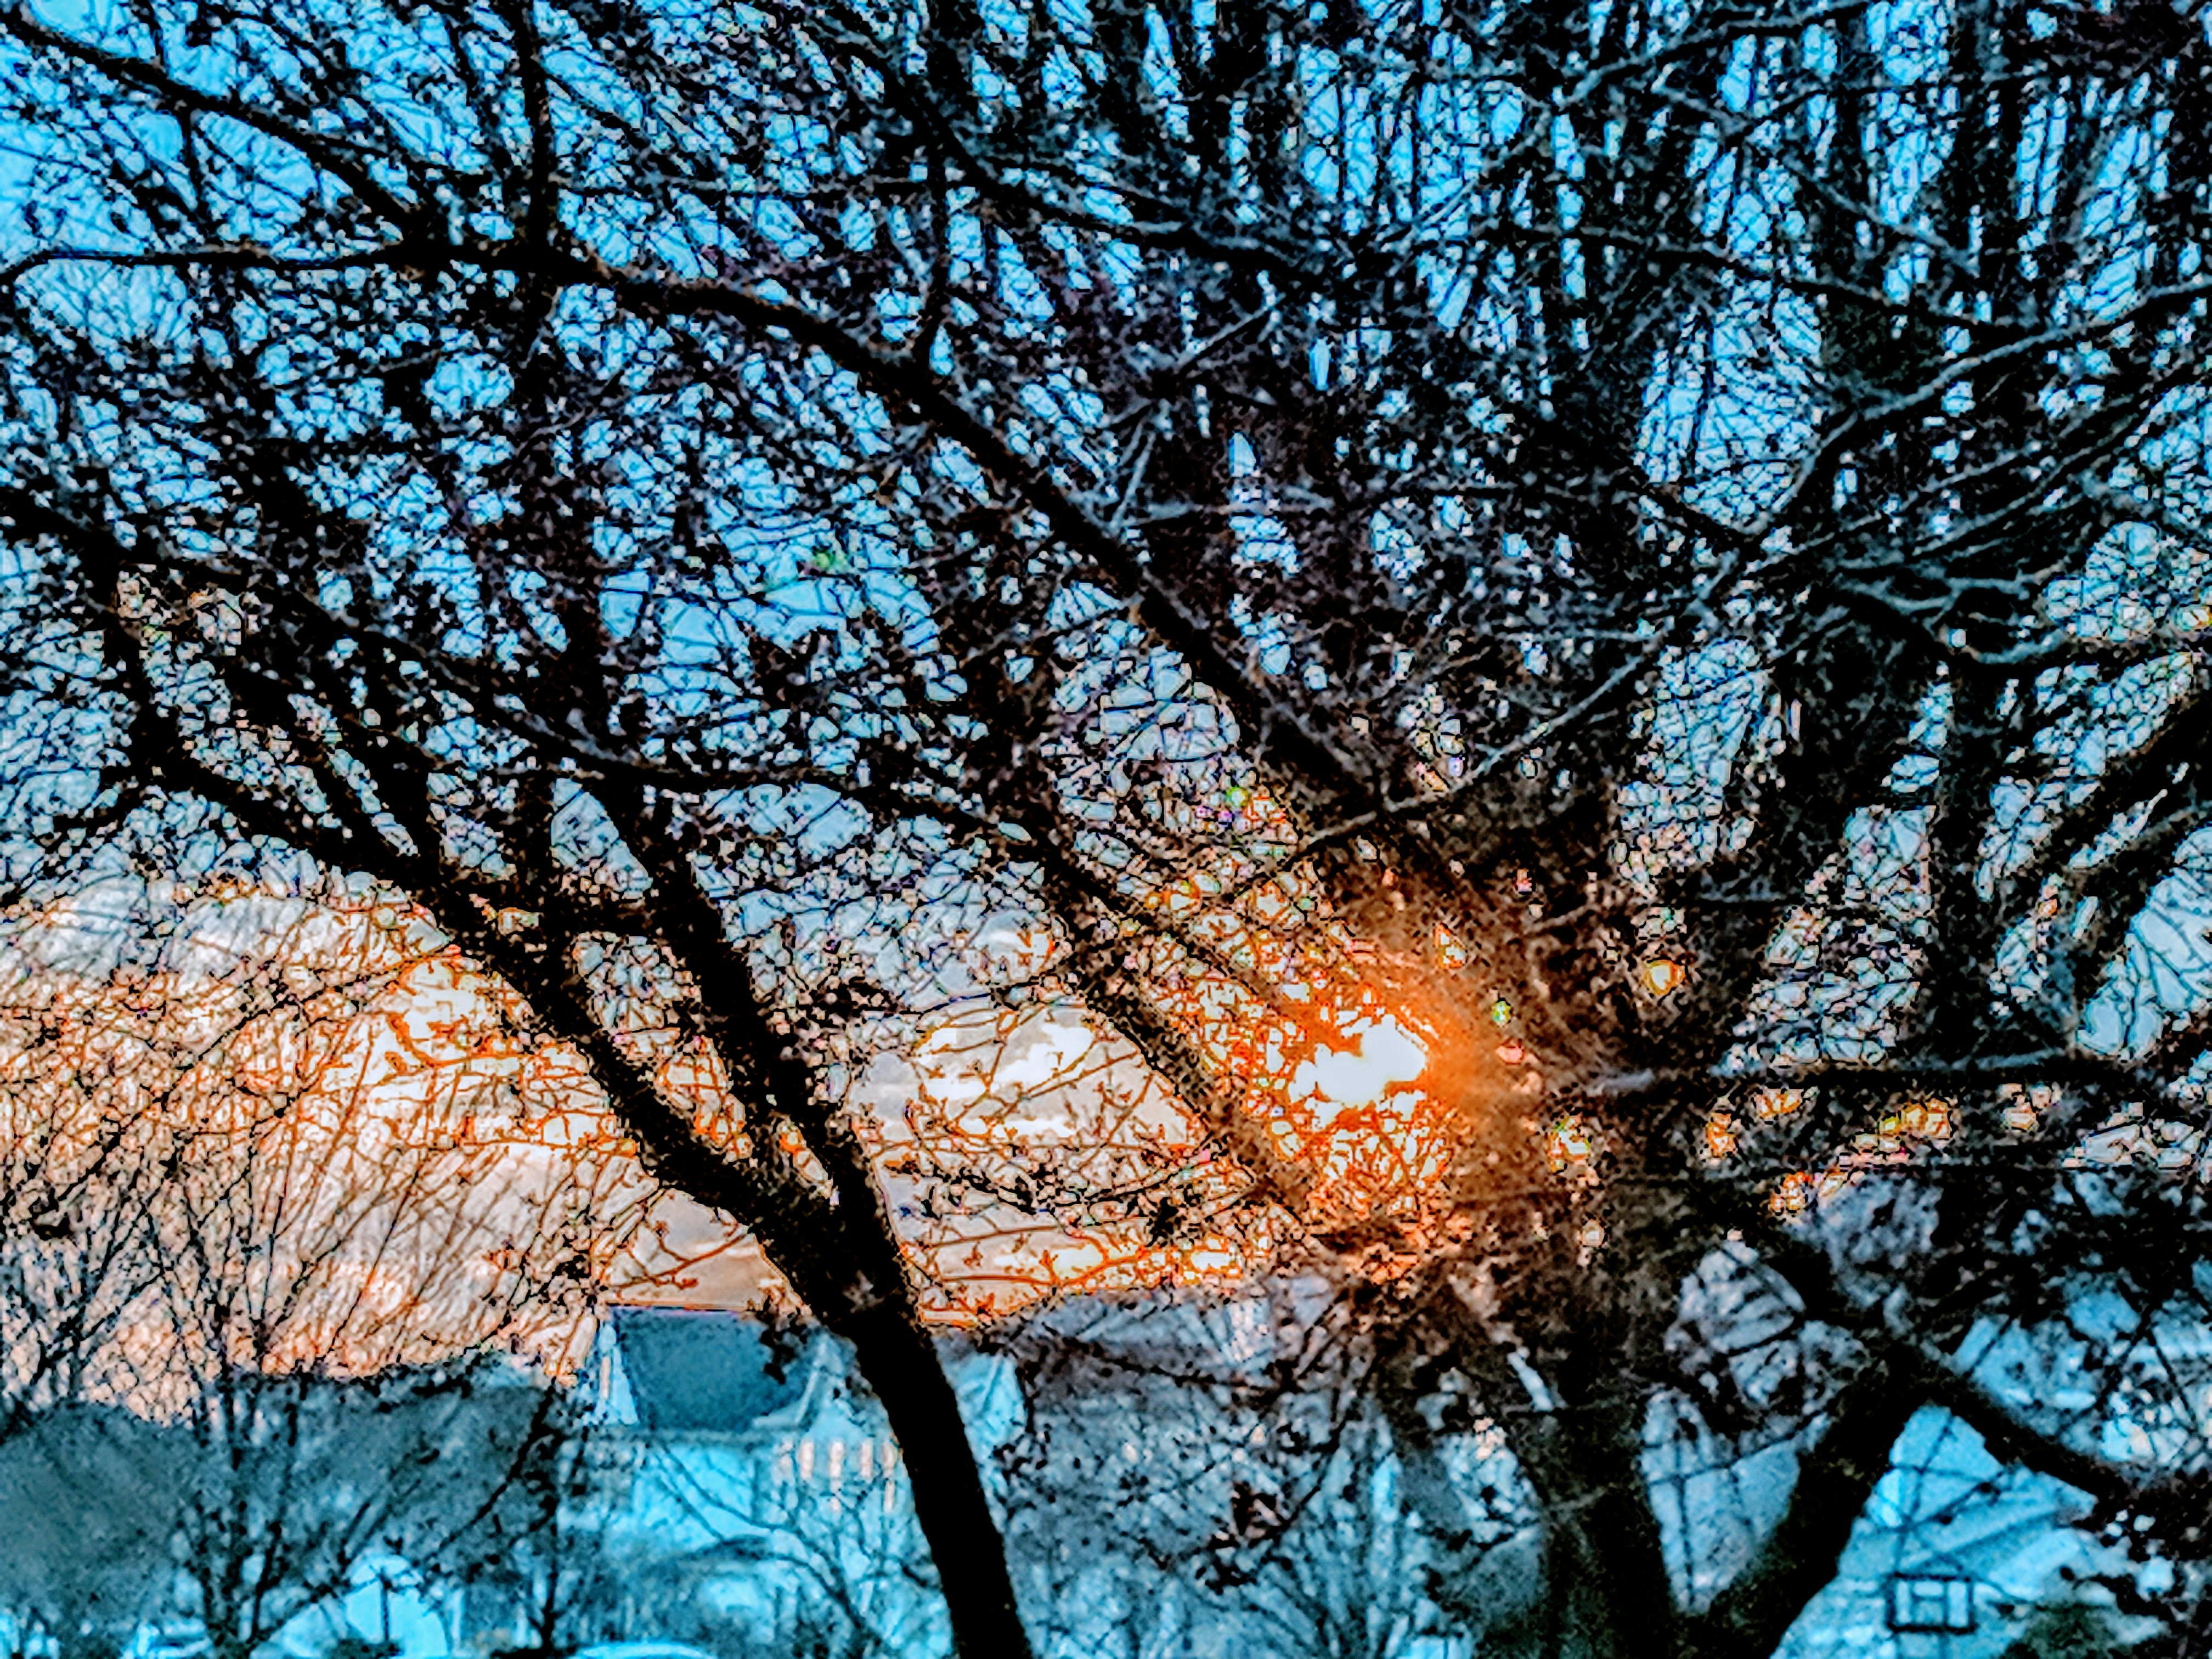 Free stock photo of Imaginary World, peach sunset, sky